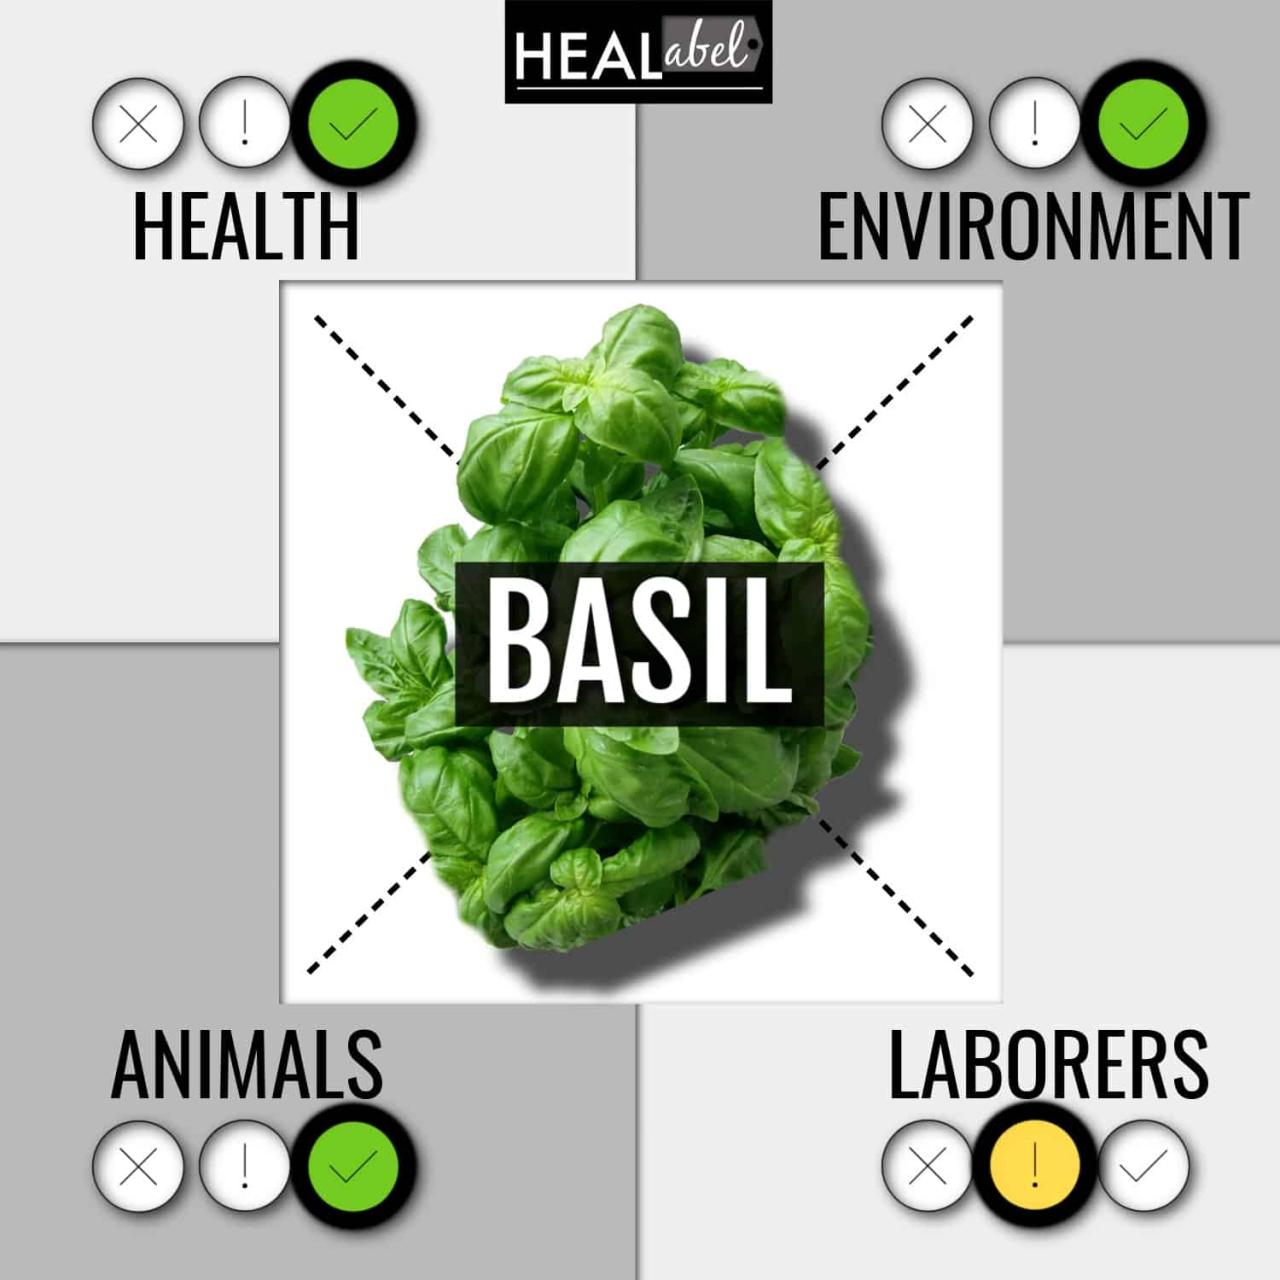 Basil herb livebetter